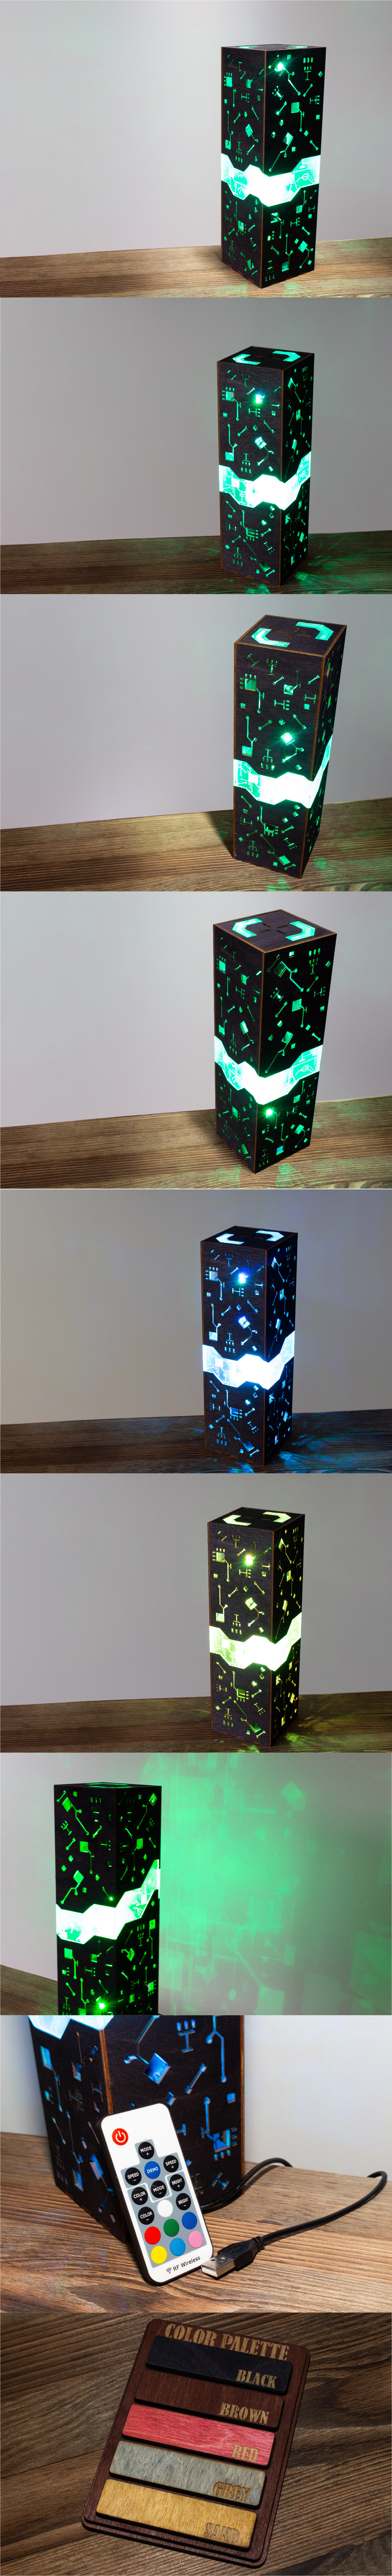 Cyberpunk Night Lamp | Bifurcated Parts Shape Sci-Fi Contemporary Style LED Futuristic Lamp